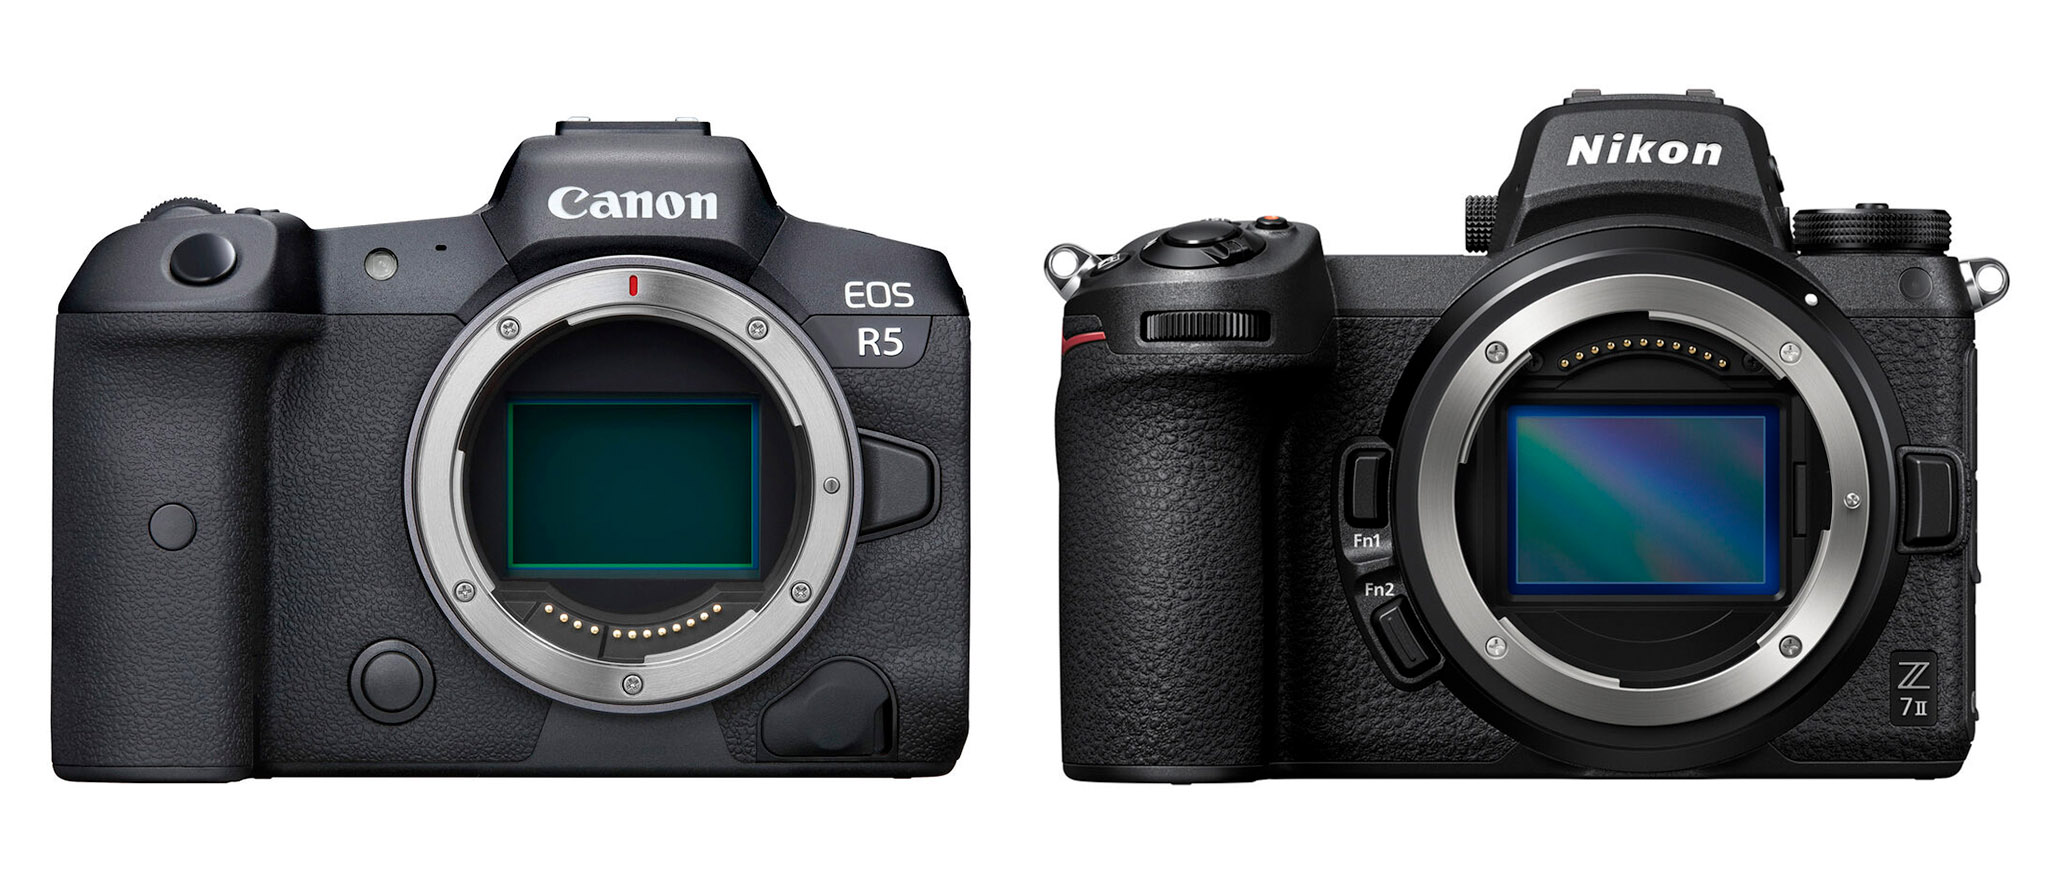 antenne lexicon Briesje Canon EOS R5 versus Nikon Z7 ii – The Gearblog